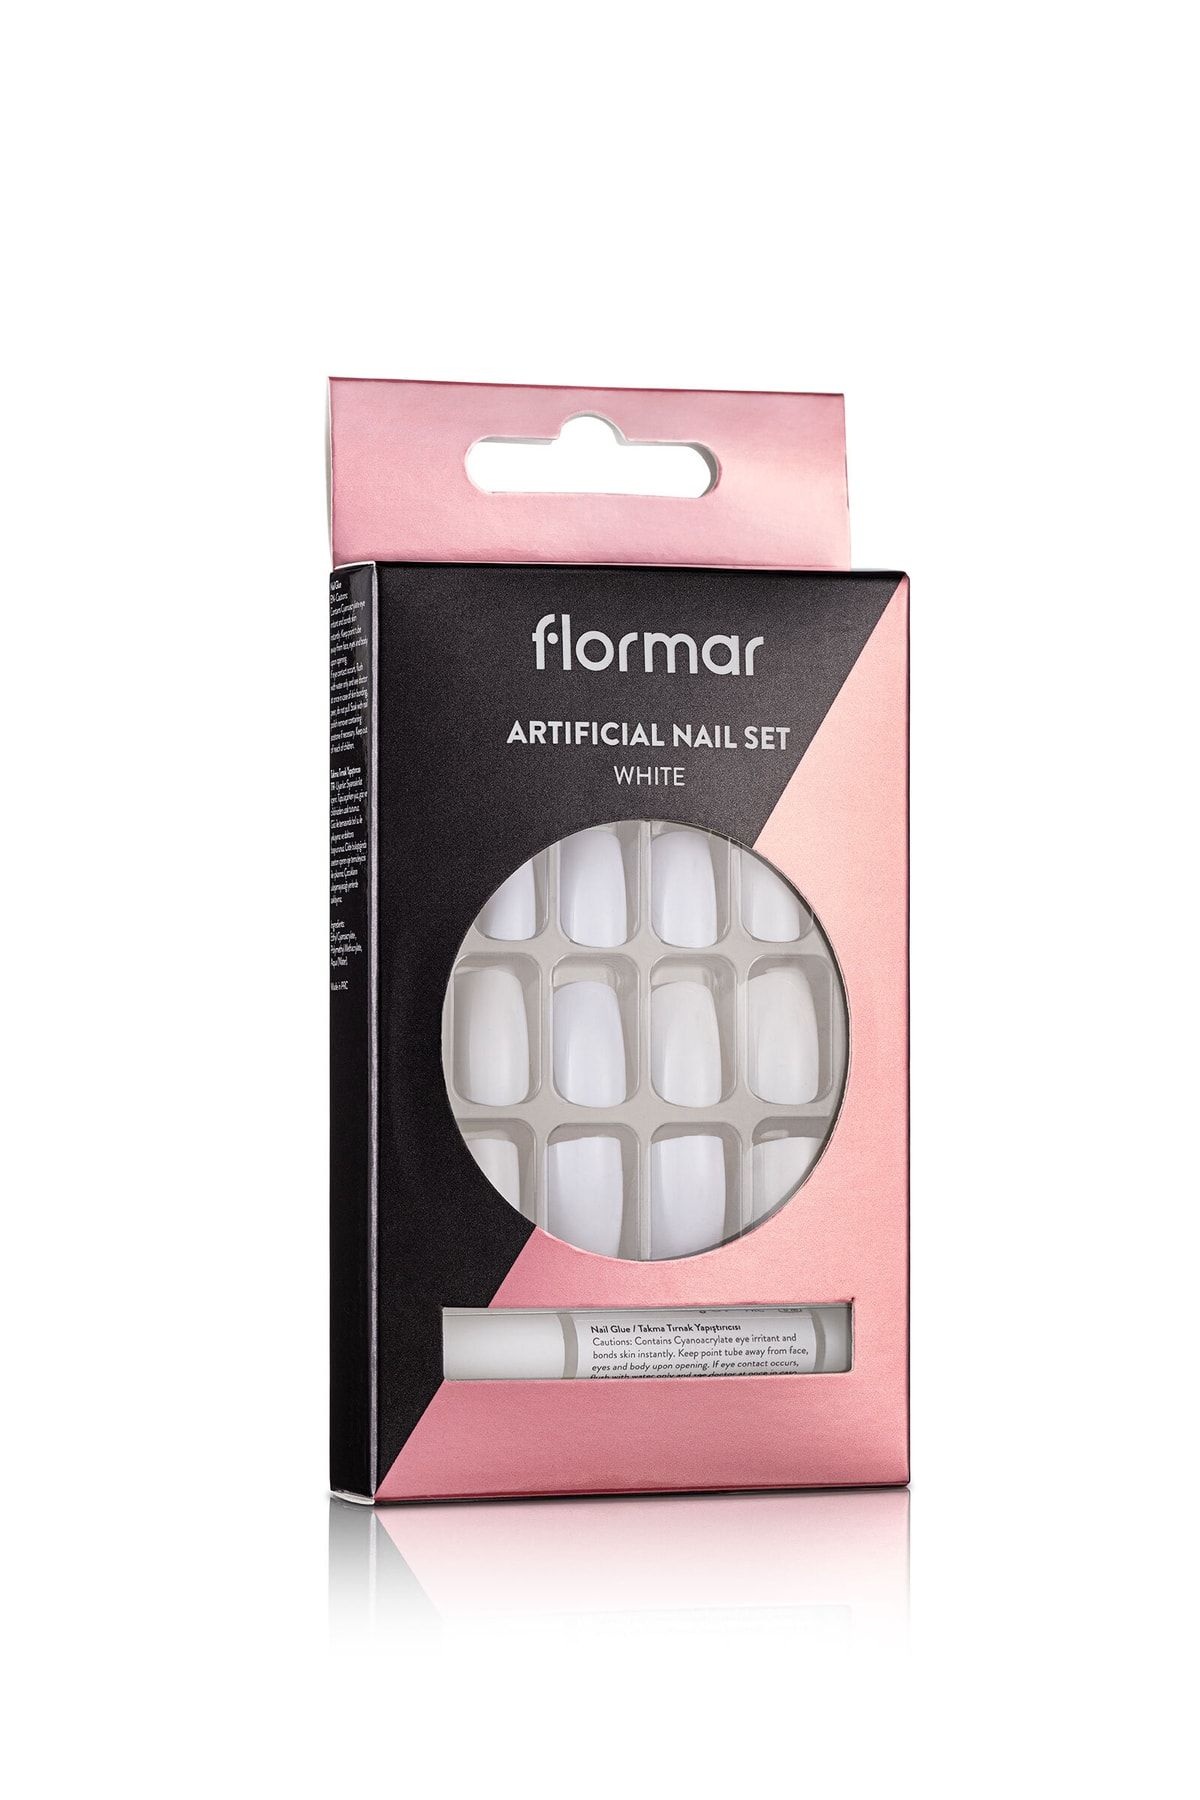 Flormar Klasik Takma Tırnak Seti - Artificial Nail Set - 052 - 8690604598625